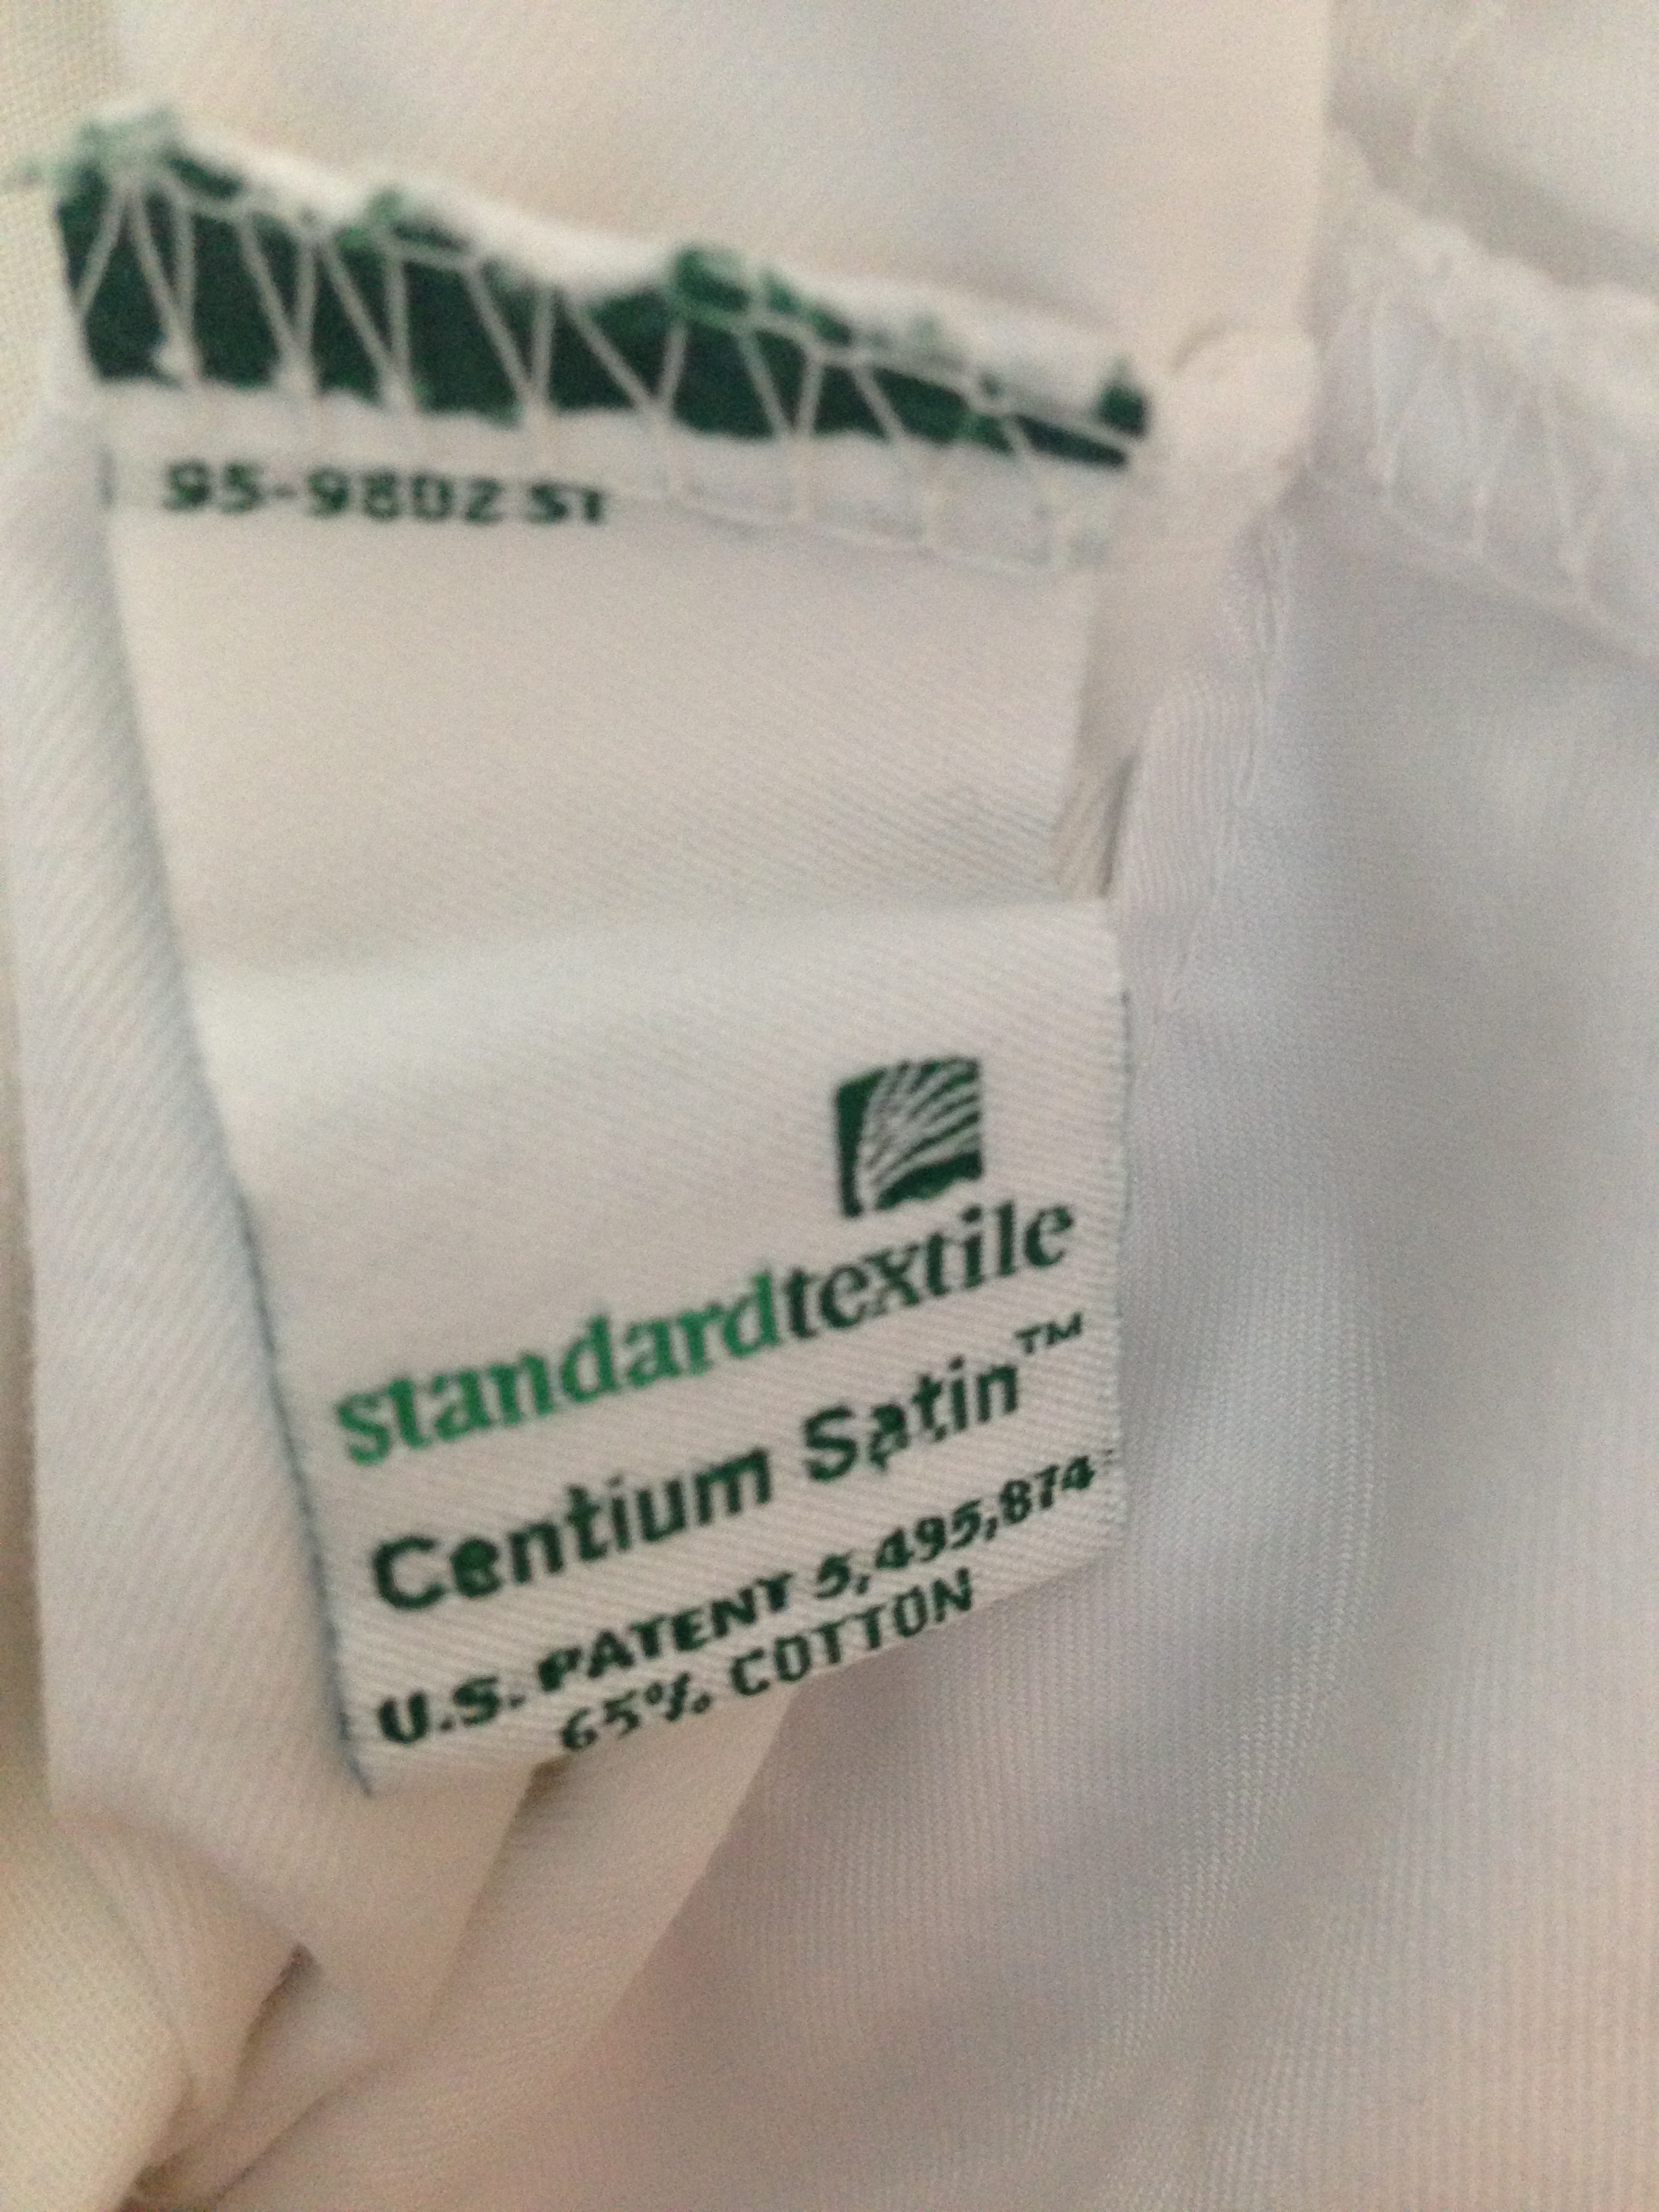 a label on a white shirt